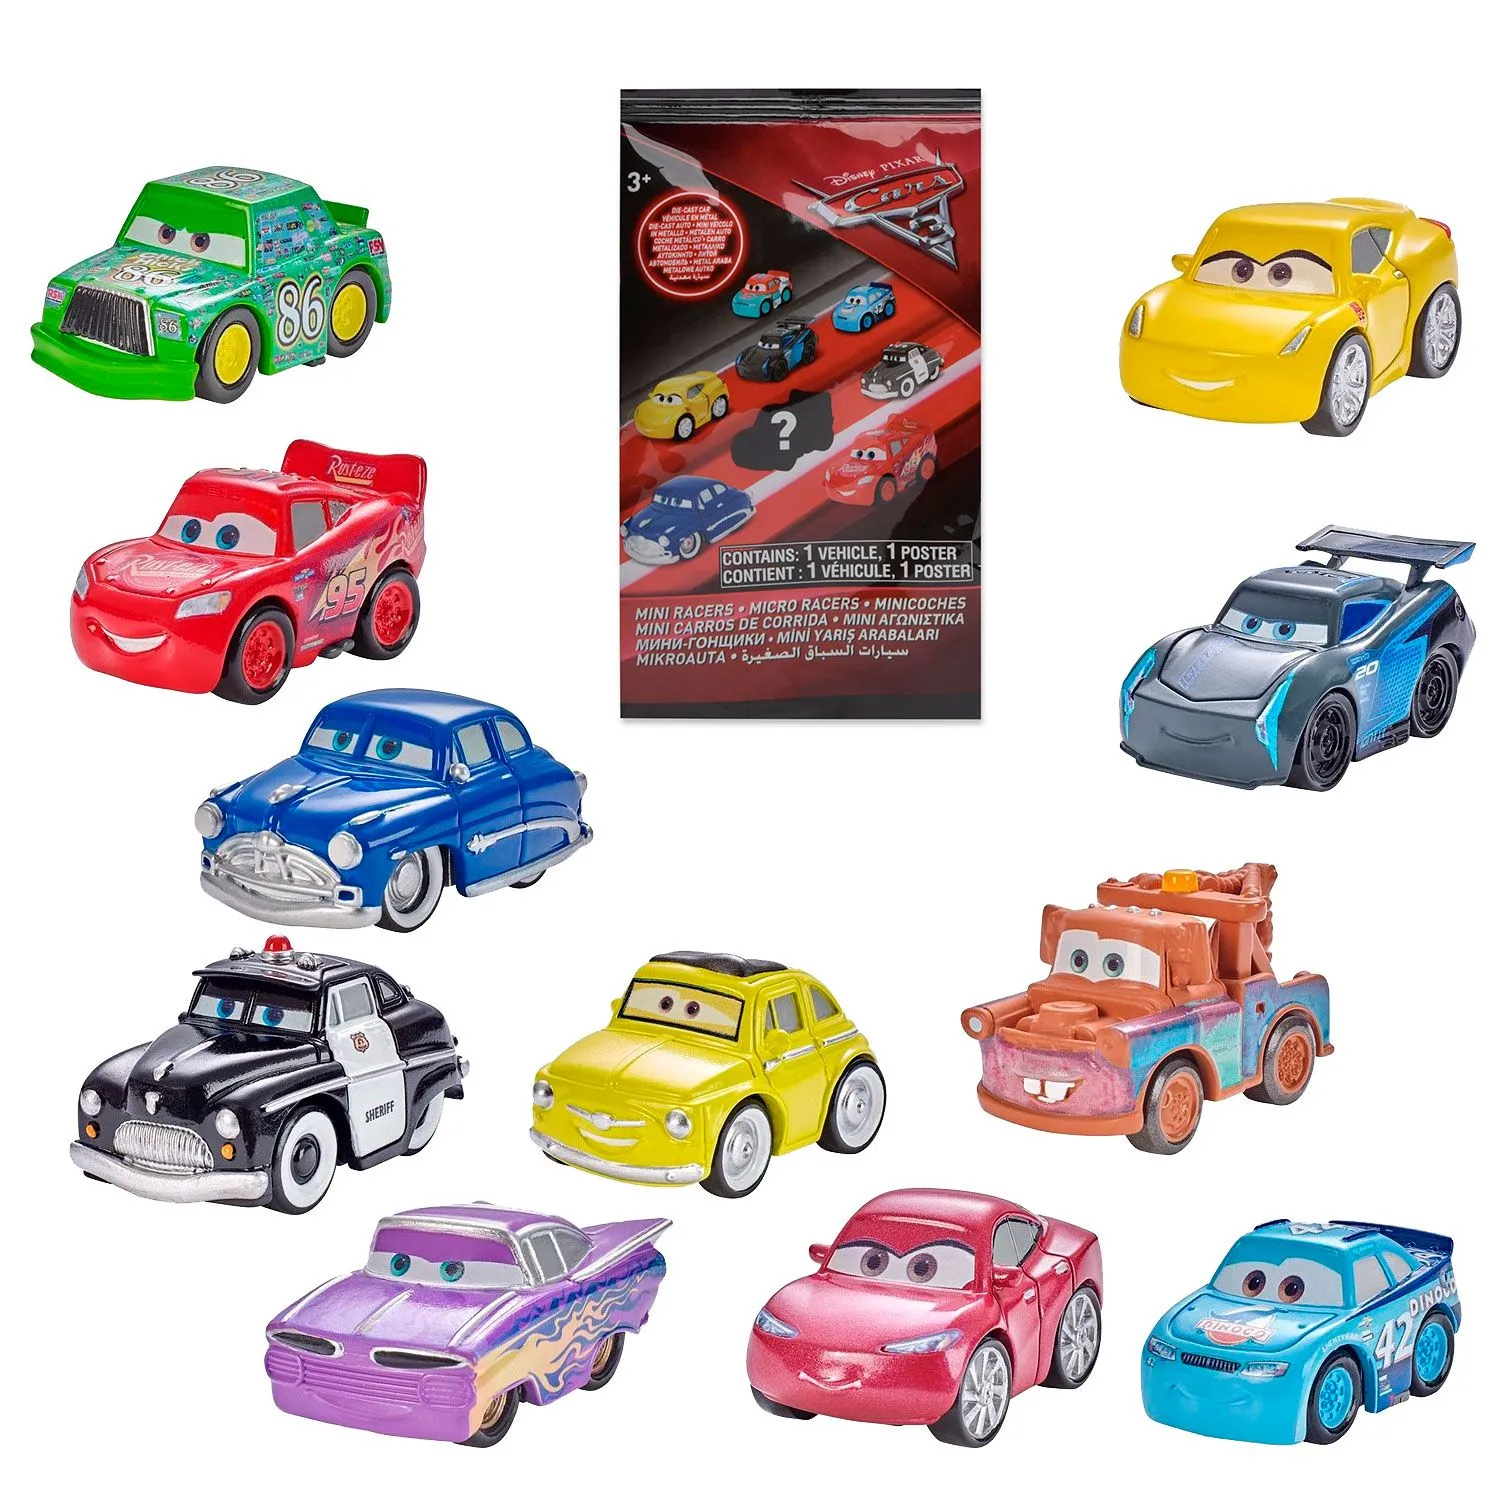 Джет Робинсон Тачки 3. Mattel cars fbg74 мини-машинки. Тачки 3 мини машинки. Тачки 3 игрушки. Мини тачки